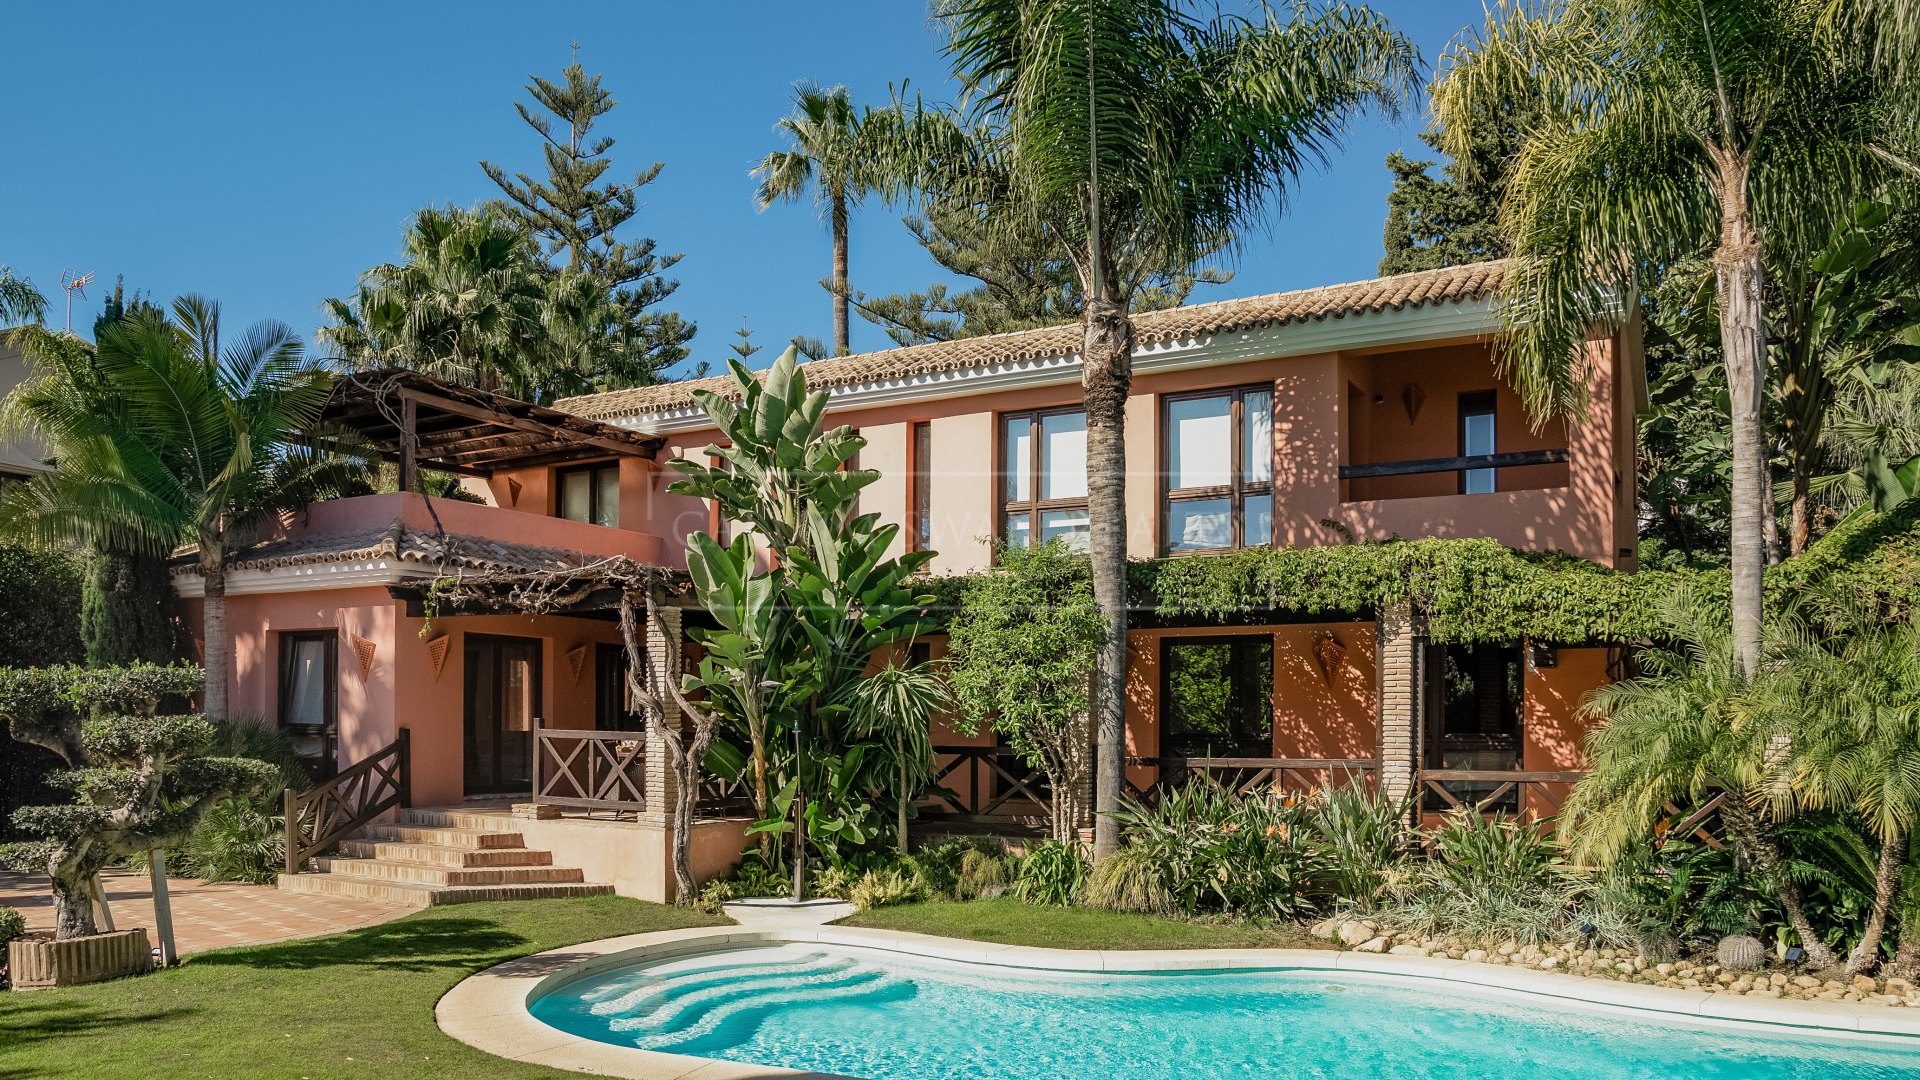 Luxurious Balinese-Style Villa on Marbella's Golden Mile, a short walk from the beach